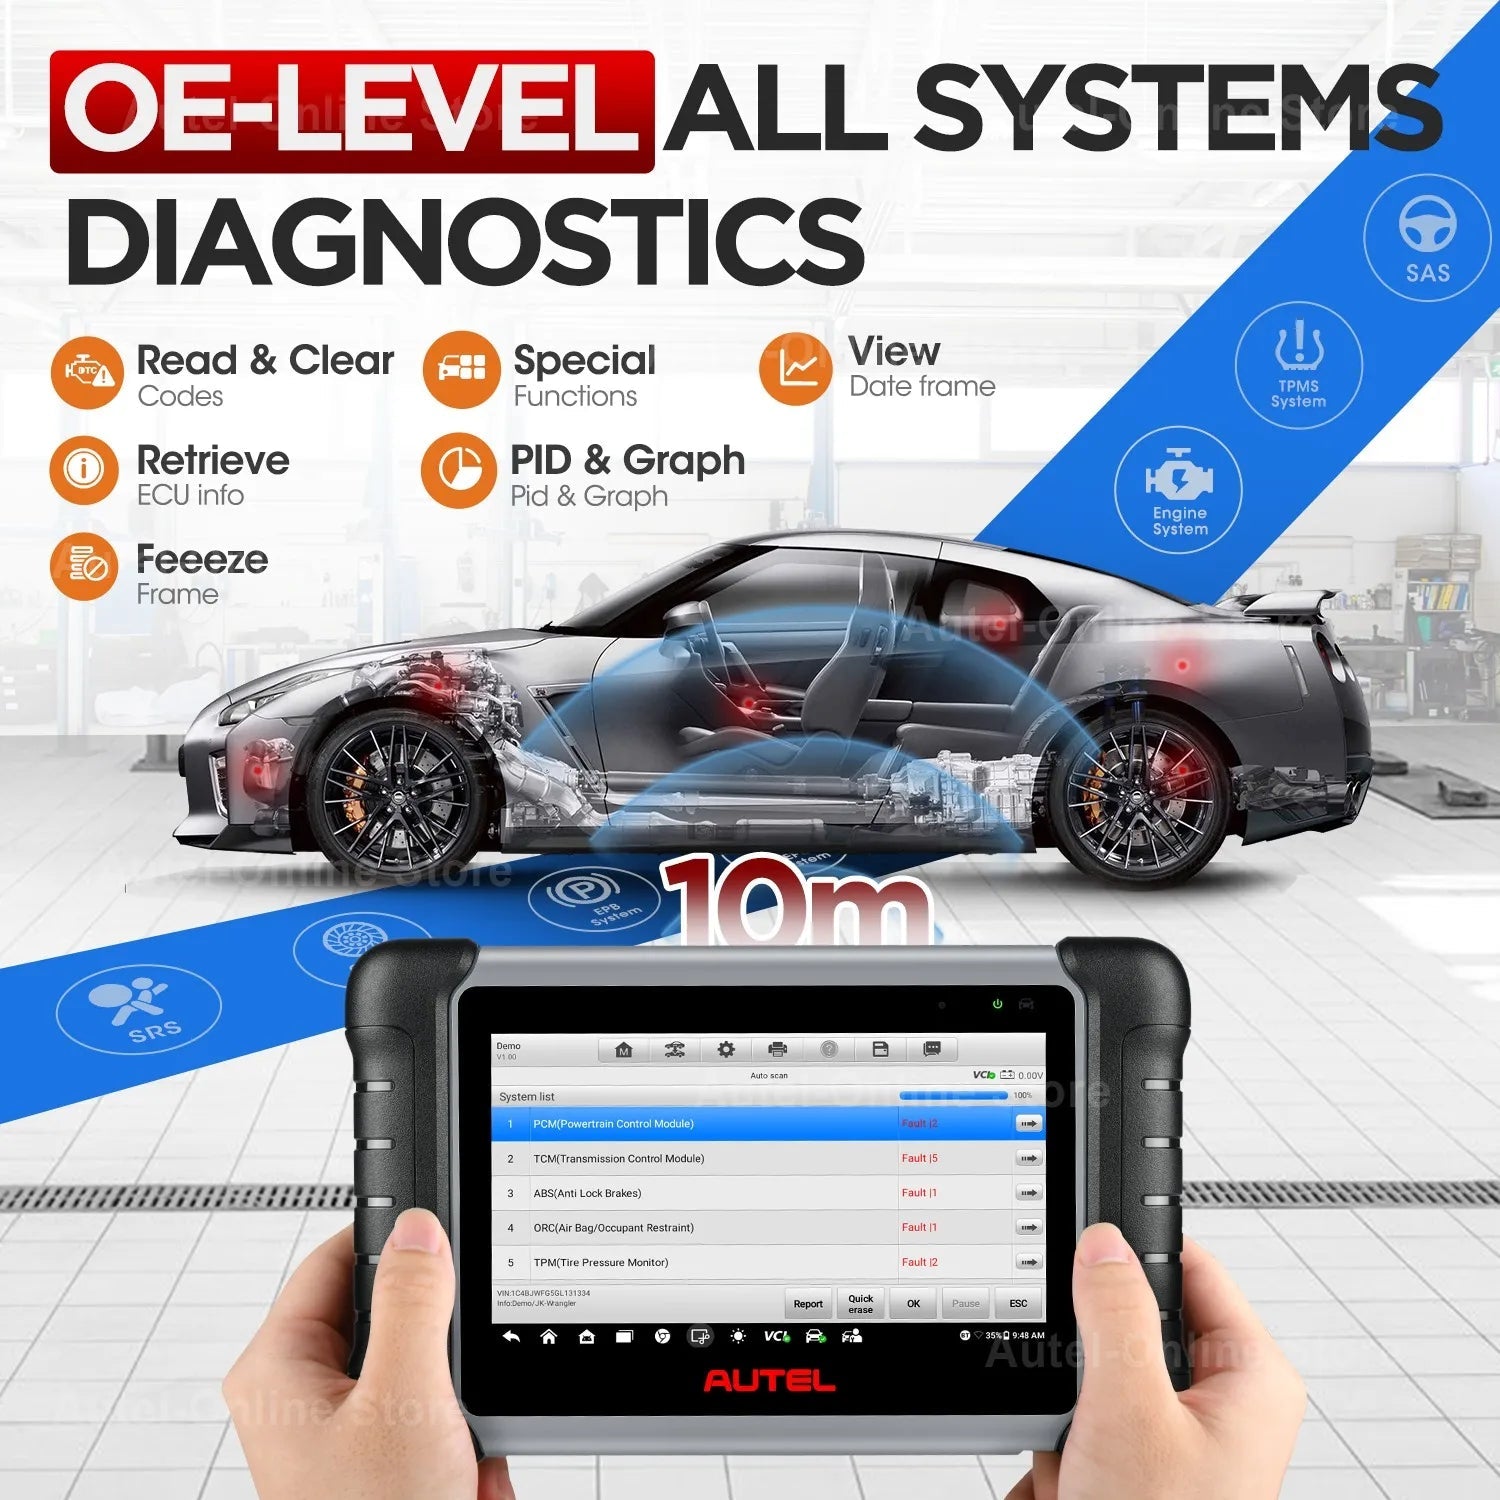 Autel MK808BT PRO Car Diagnostic Tool Autel New Upgrade OBD2 Scanner with Active Test Reset Service All System DiagnostiC - Dynamex